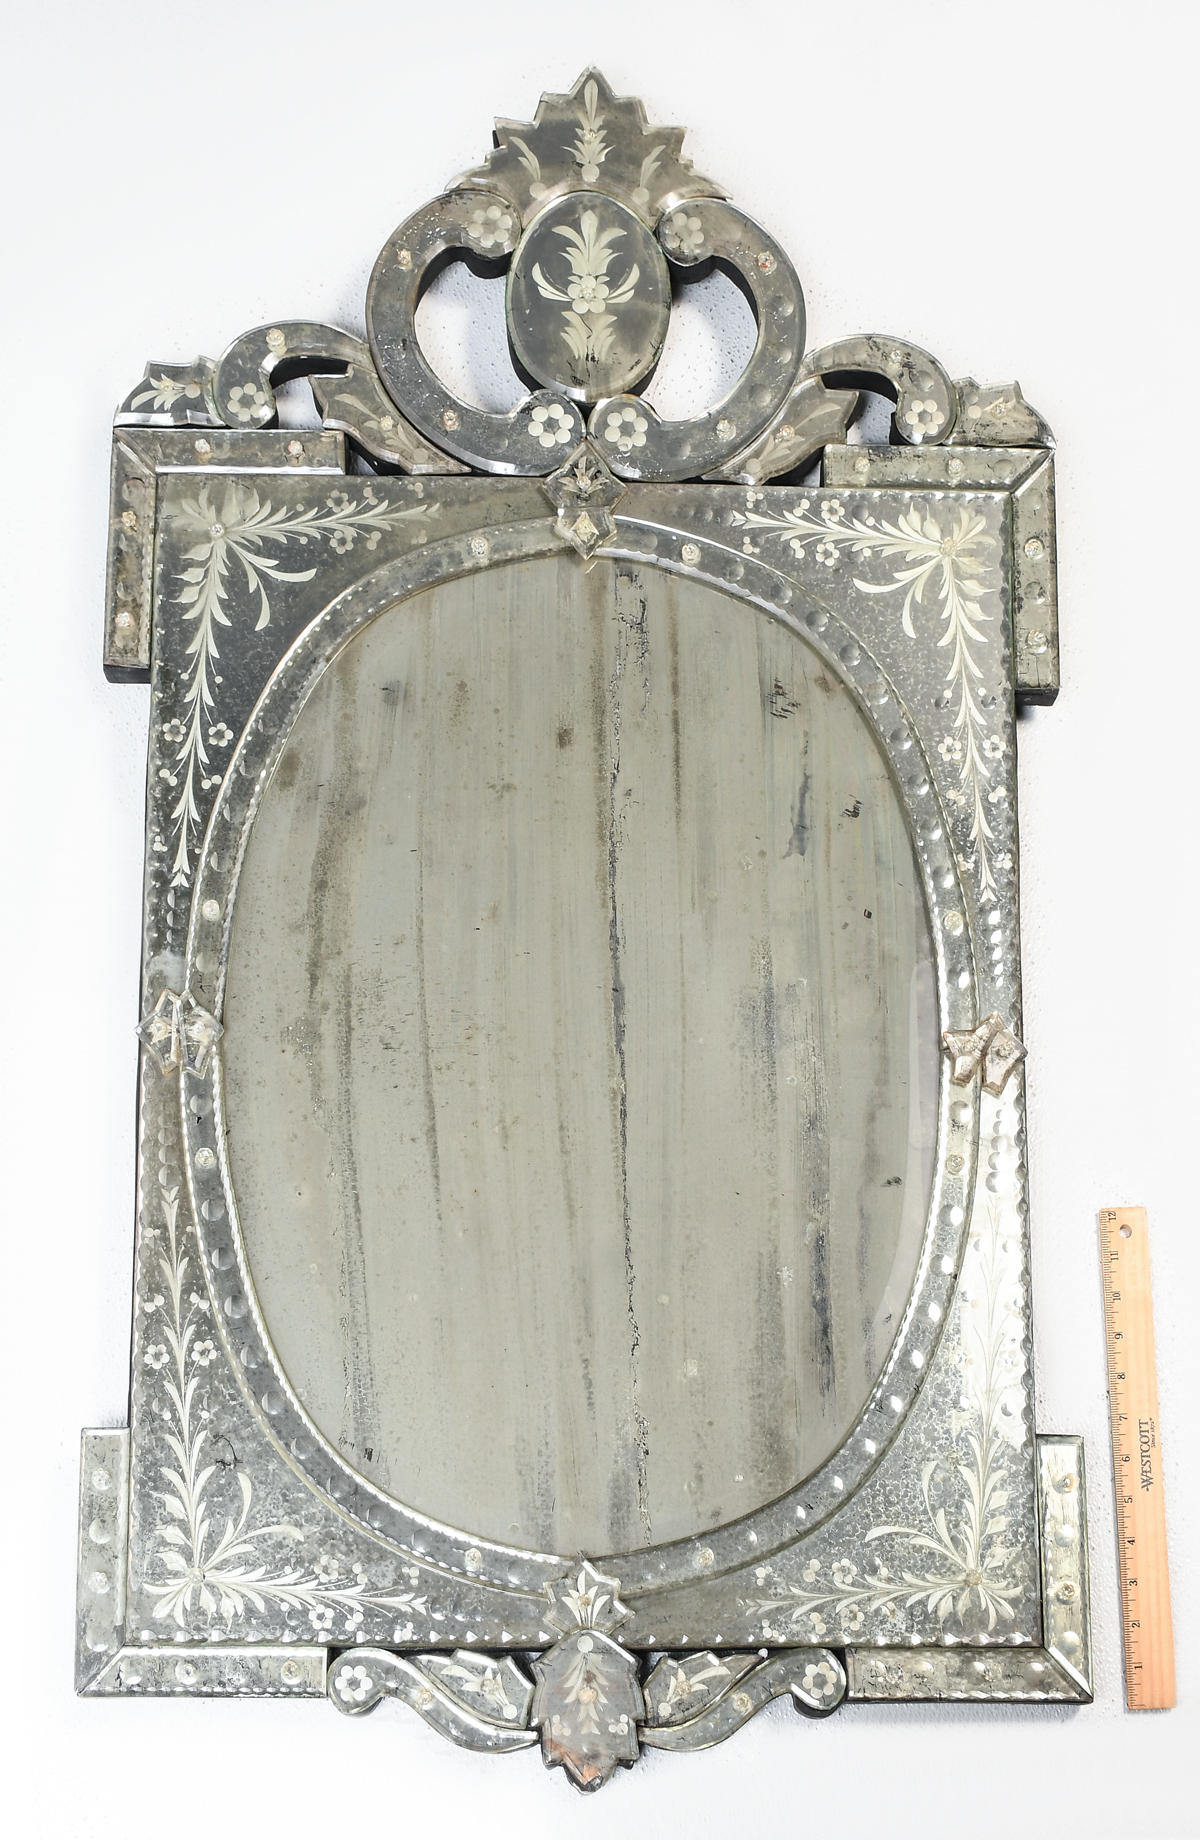 VENETIAN MIRROR: Oval center mirror